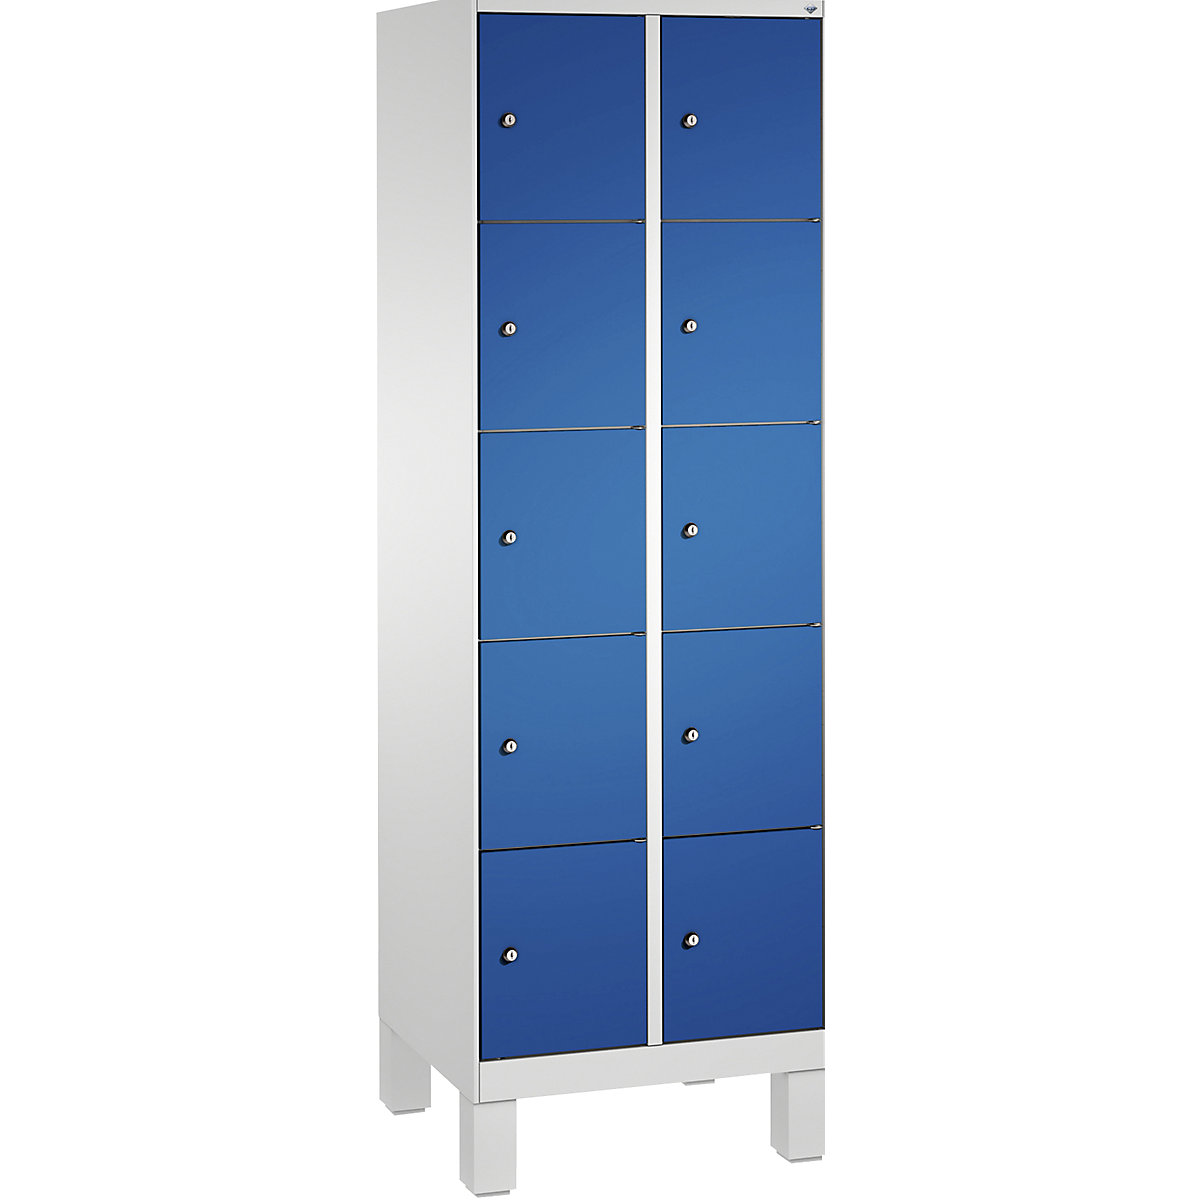 EVOLO locker unit, with feet – C+P, 2 compartments, 5 shelf compartments each, compartment width 300 mm, light grey / gentian blue-15